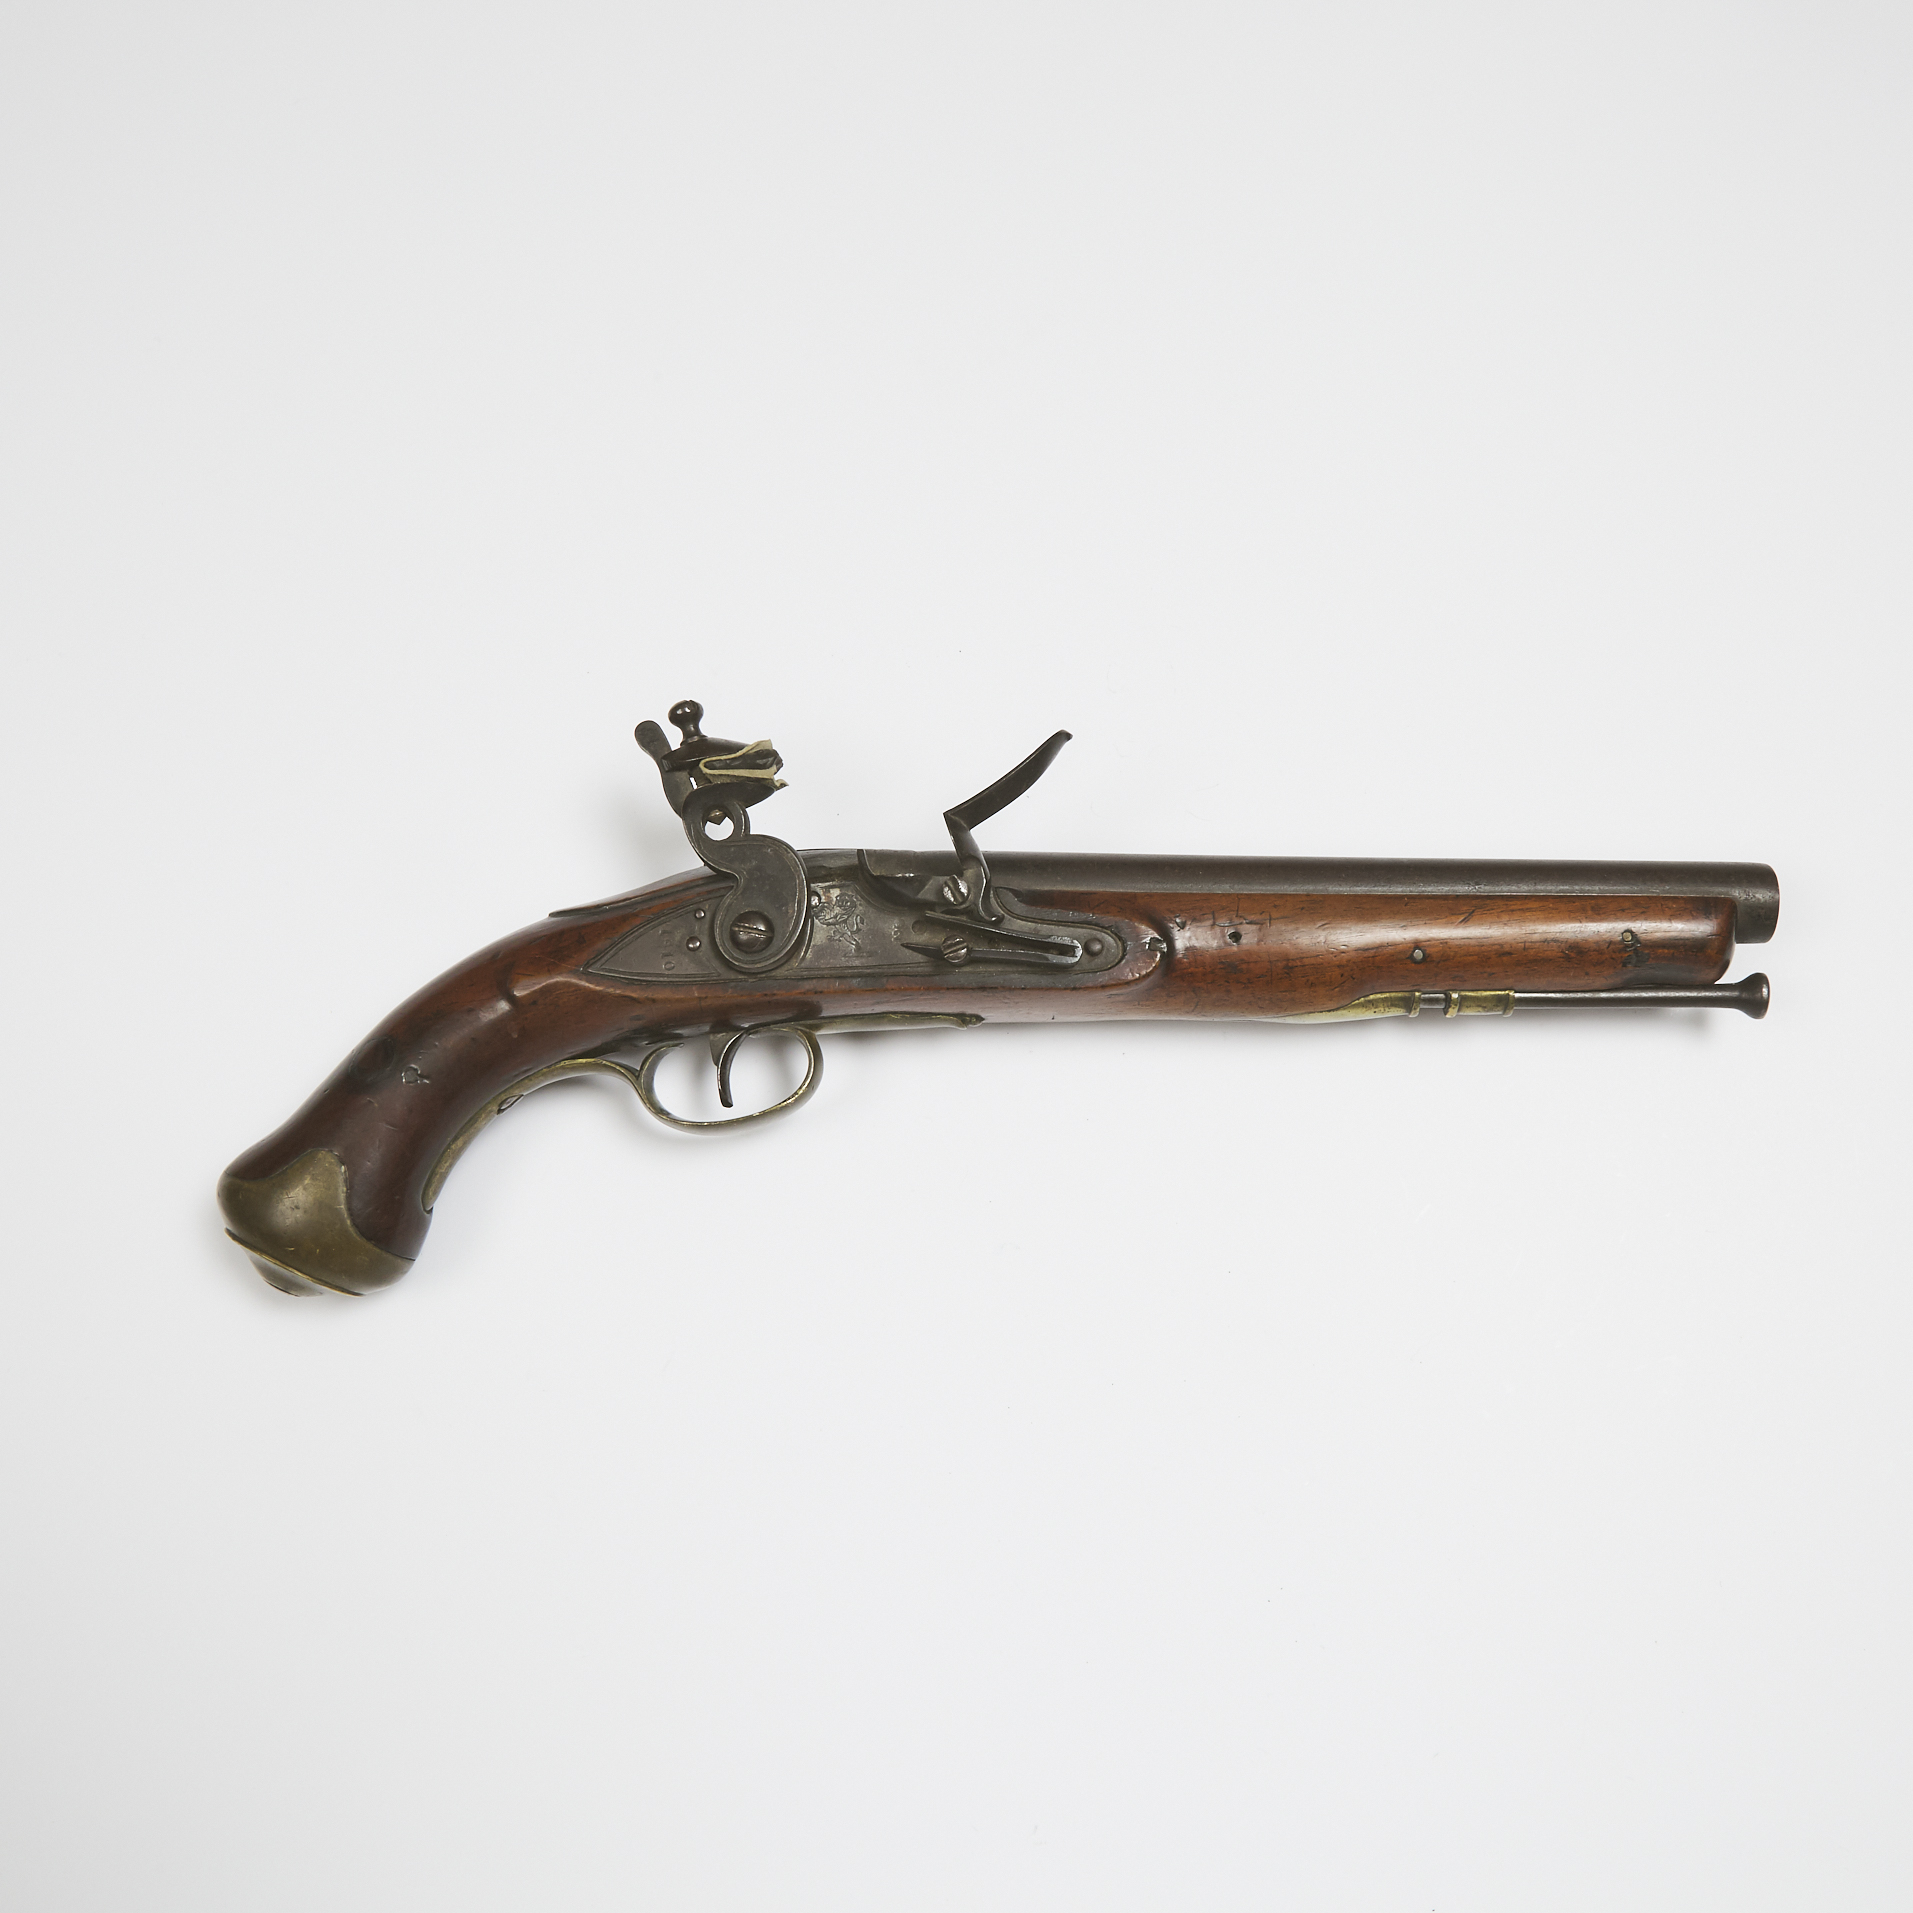 British East India Company Officer's New Land Pattern Flintlock Pistol, 1810